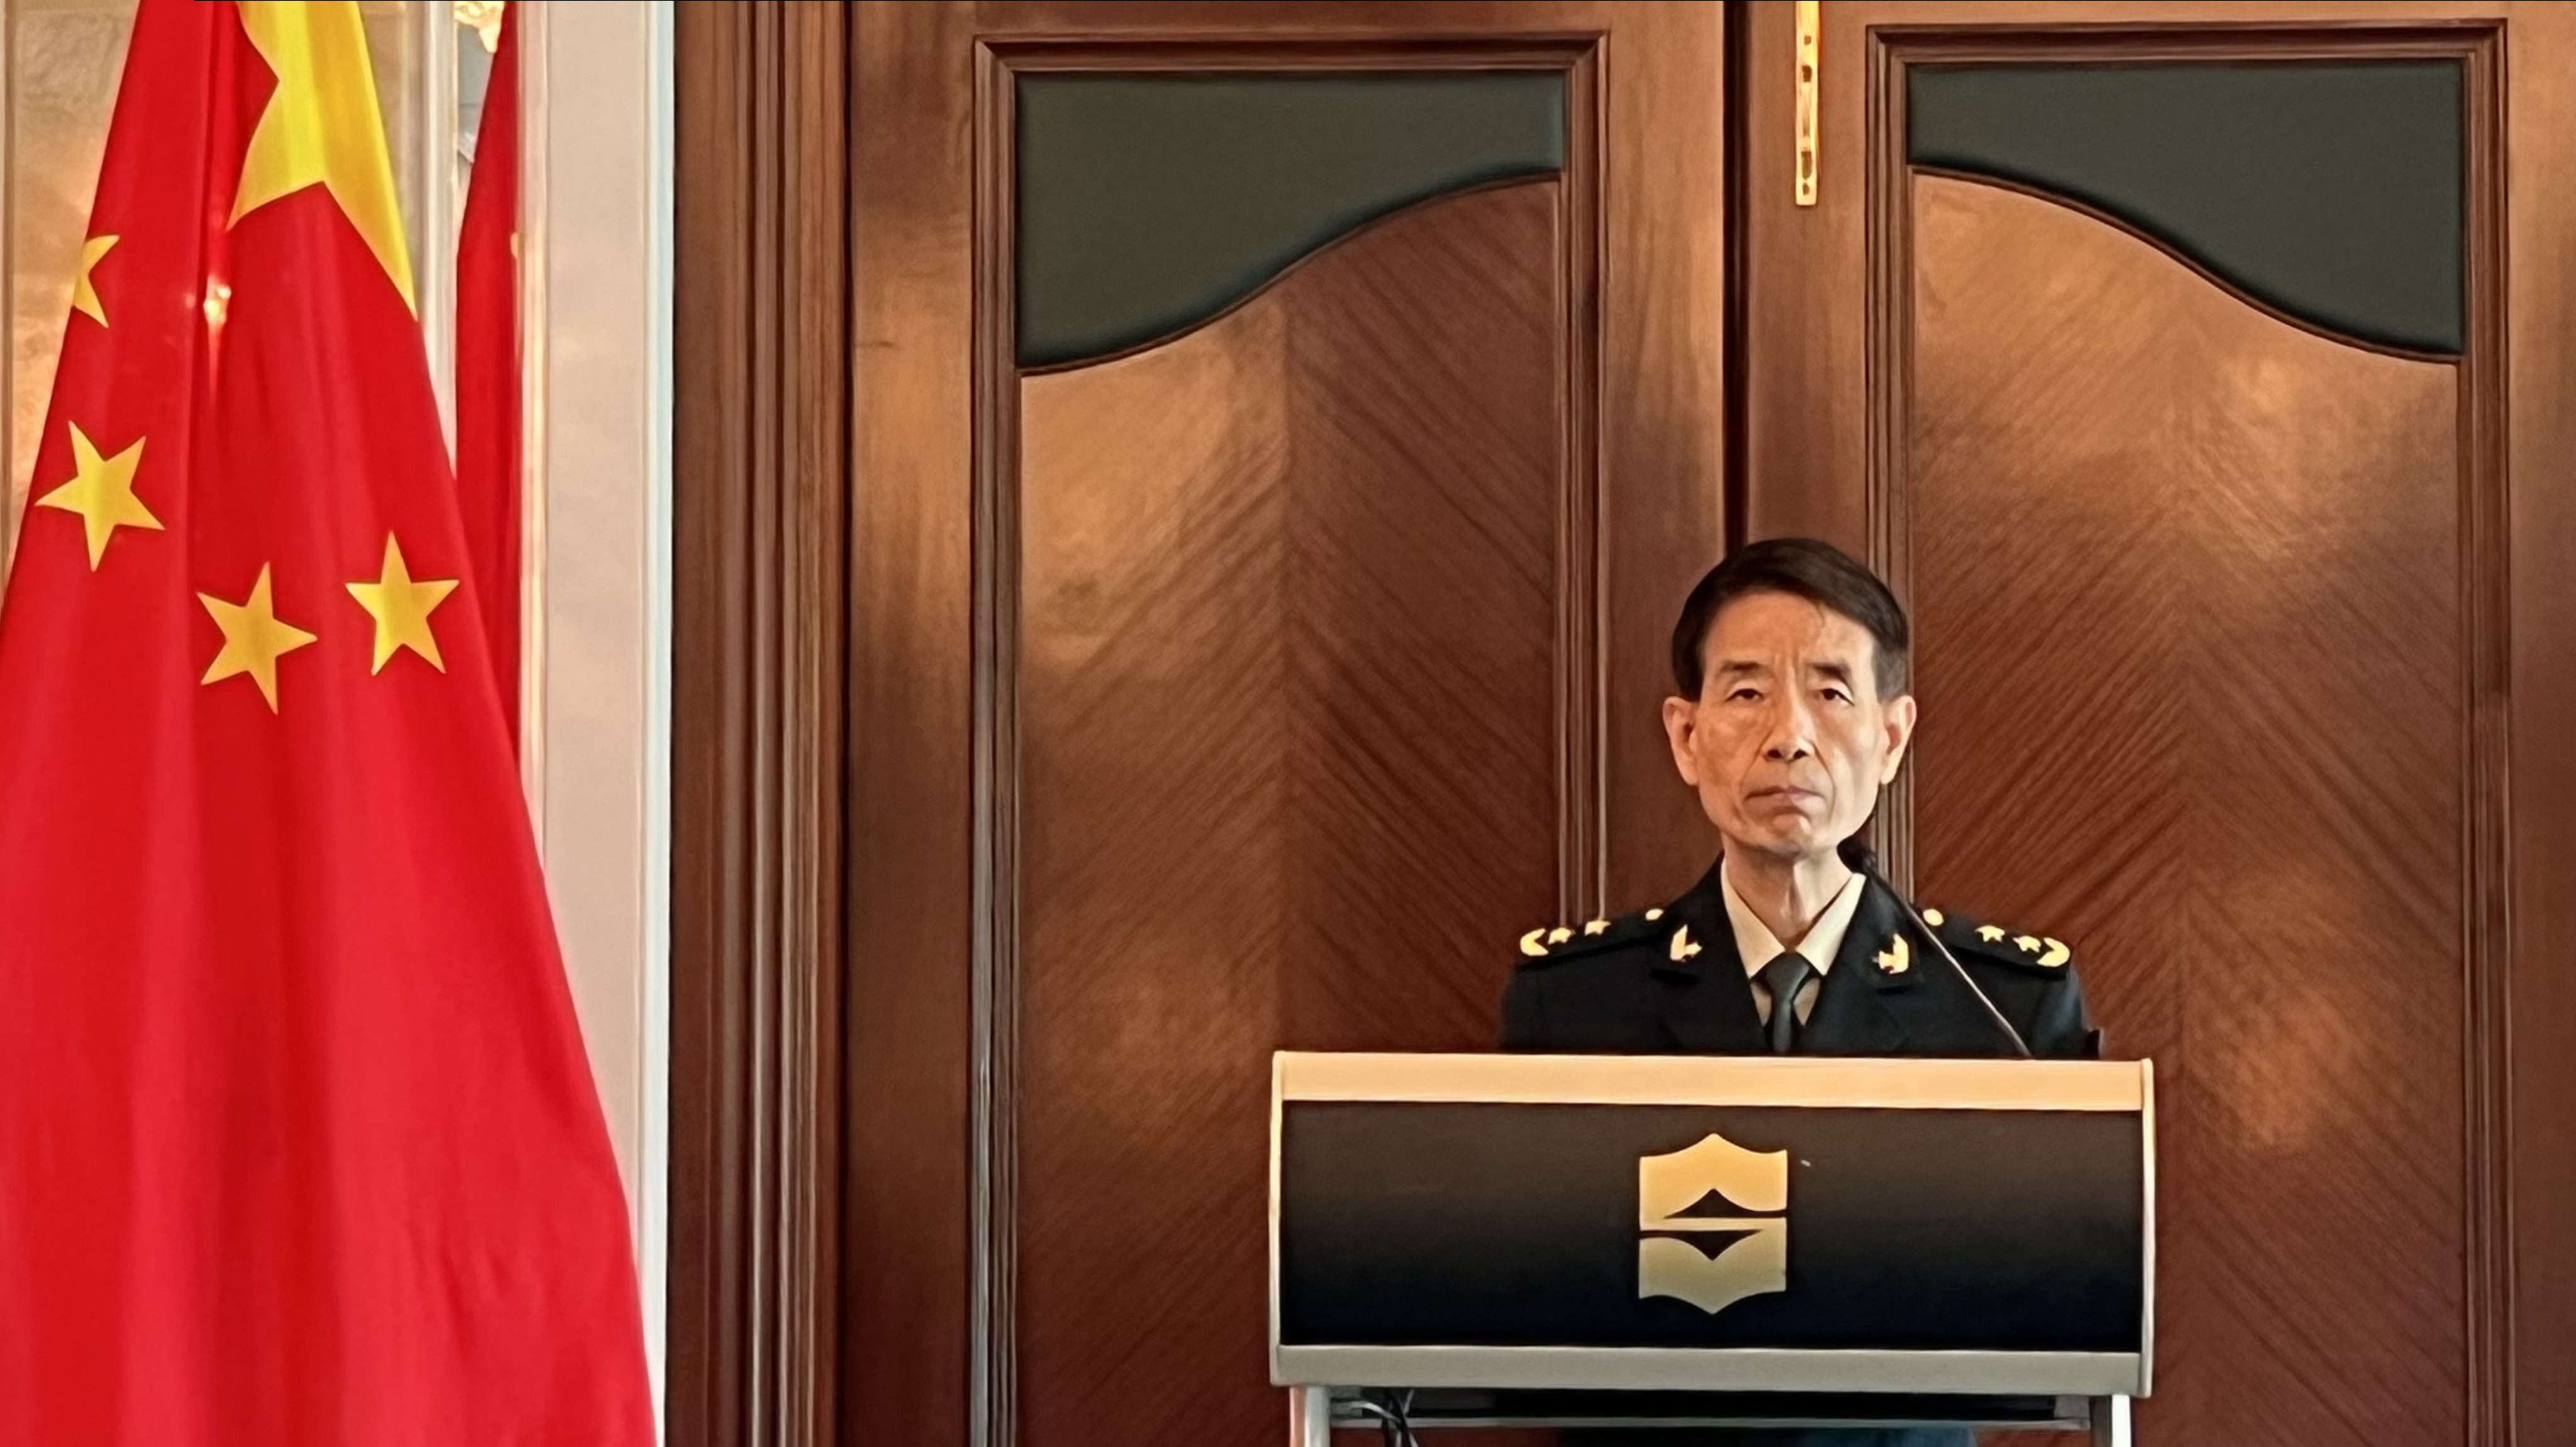 Lieutenant General Zhang Zhenzhong says playing the Taiwan card is a dangerous move. Photo: Minnie Chan